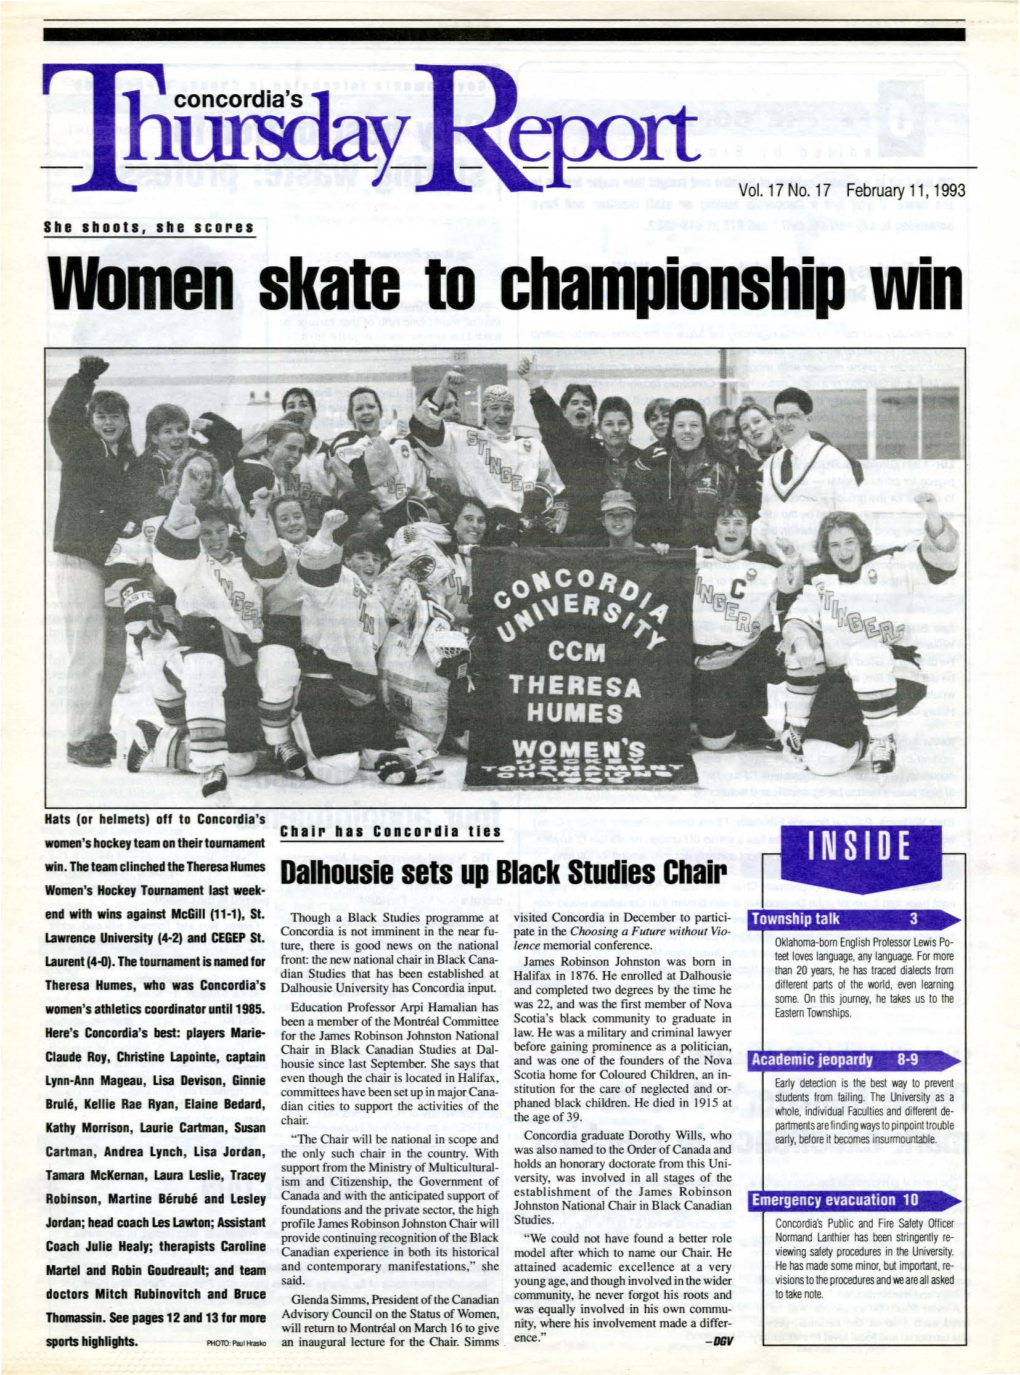 Women Skate to Championship Win